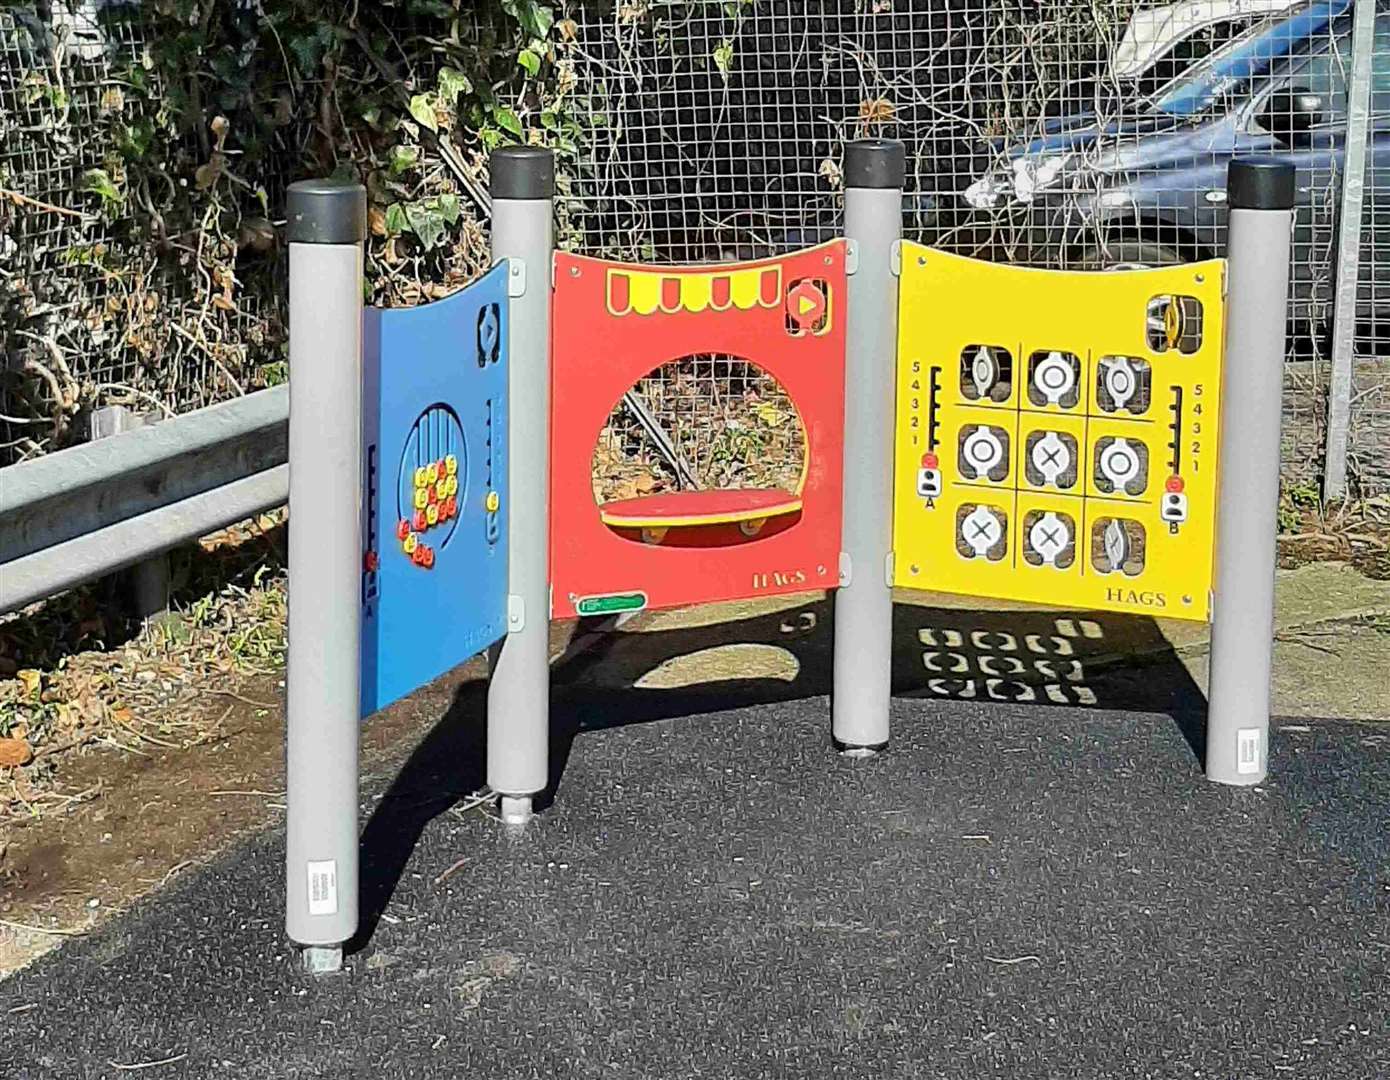 The playground in Arundel Street, Maidstone